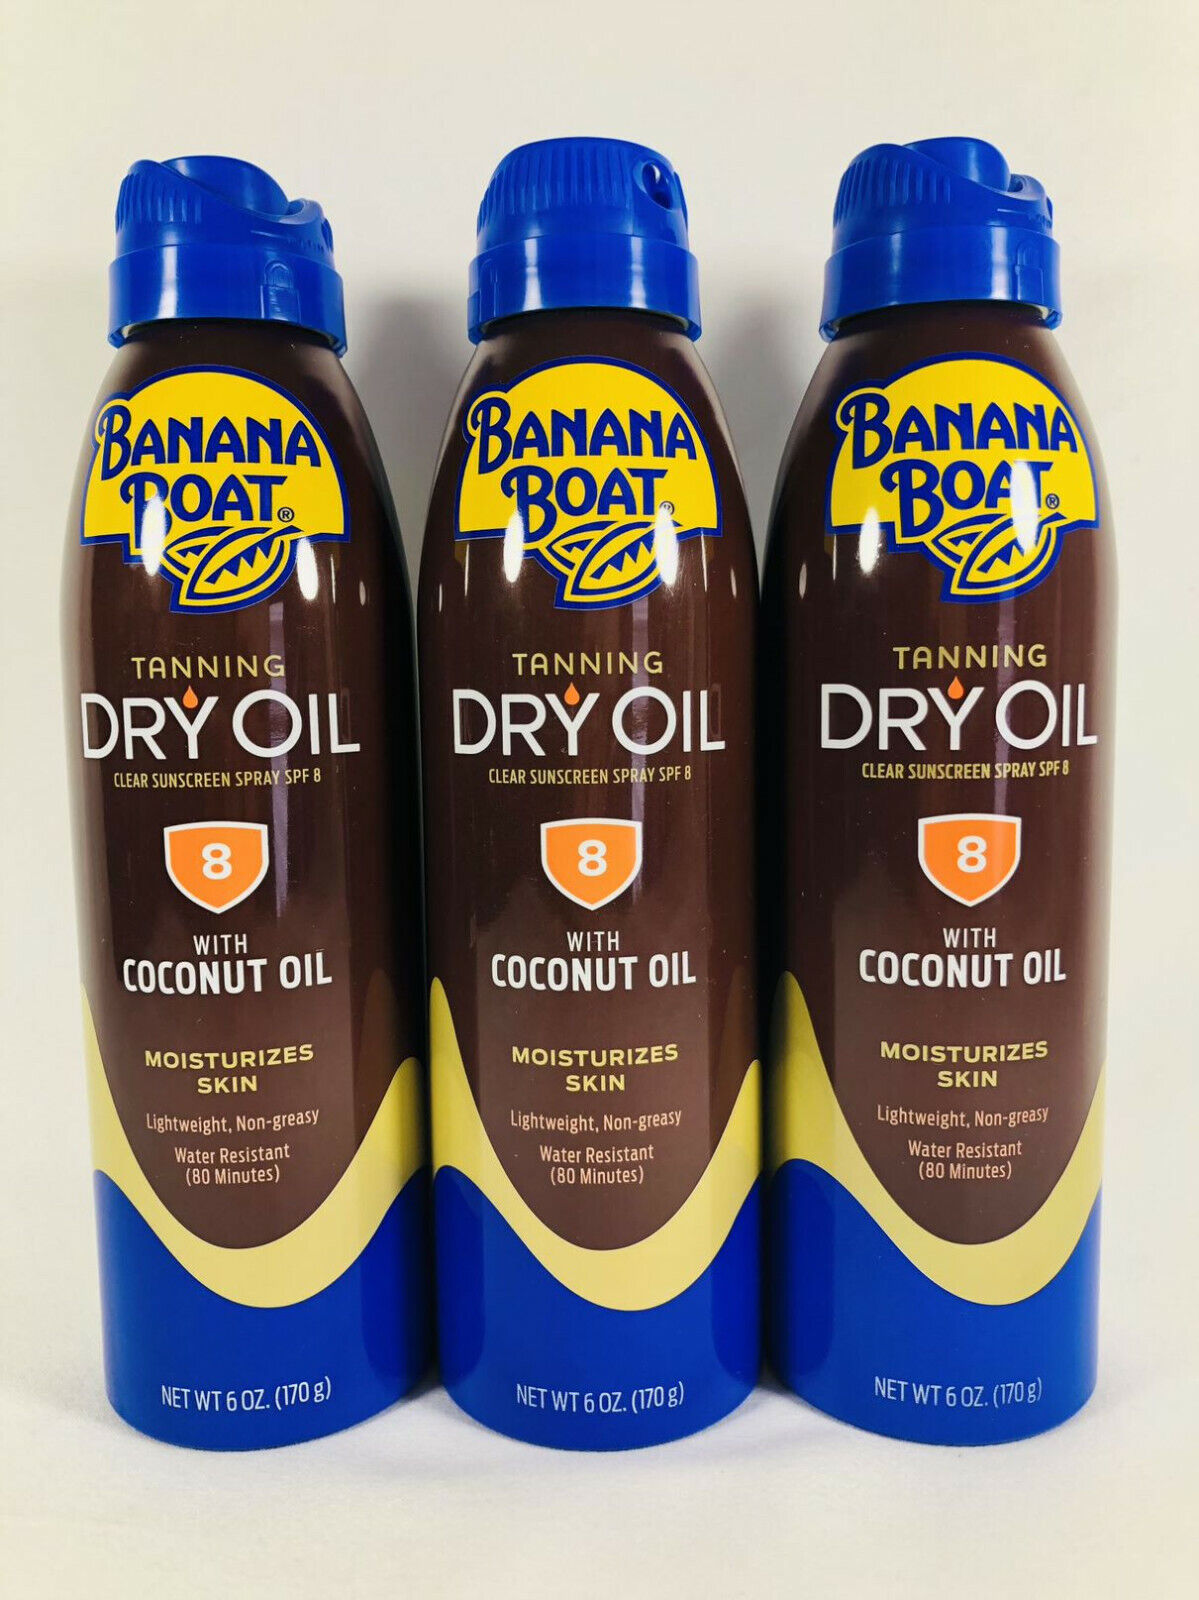 Lot of 3 Banana Boat Tanning Dry Oil Spray With Coconut Oil 6 oz. SPF 8